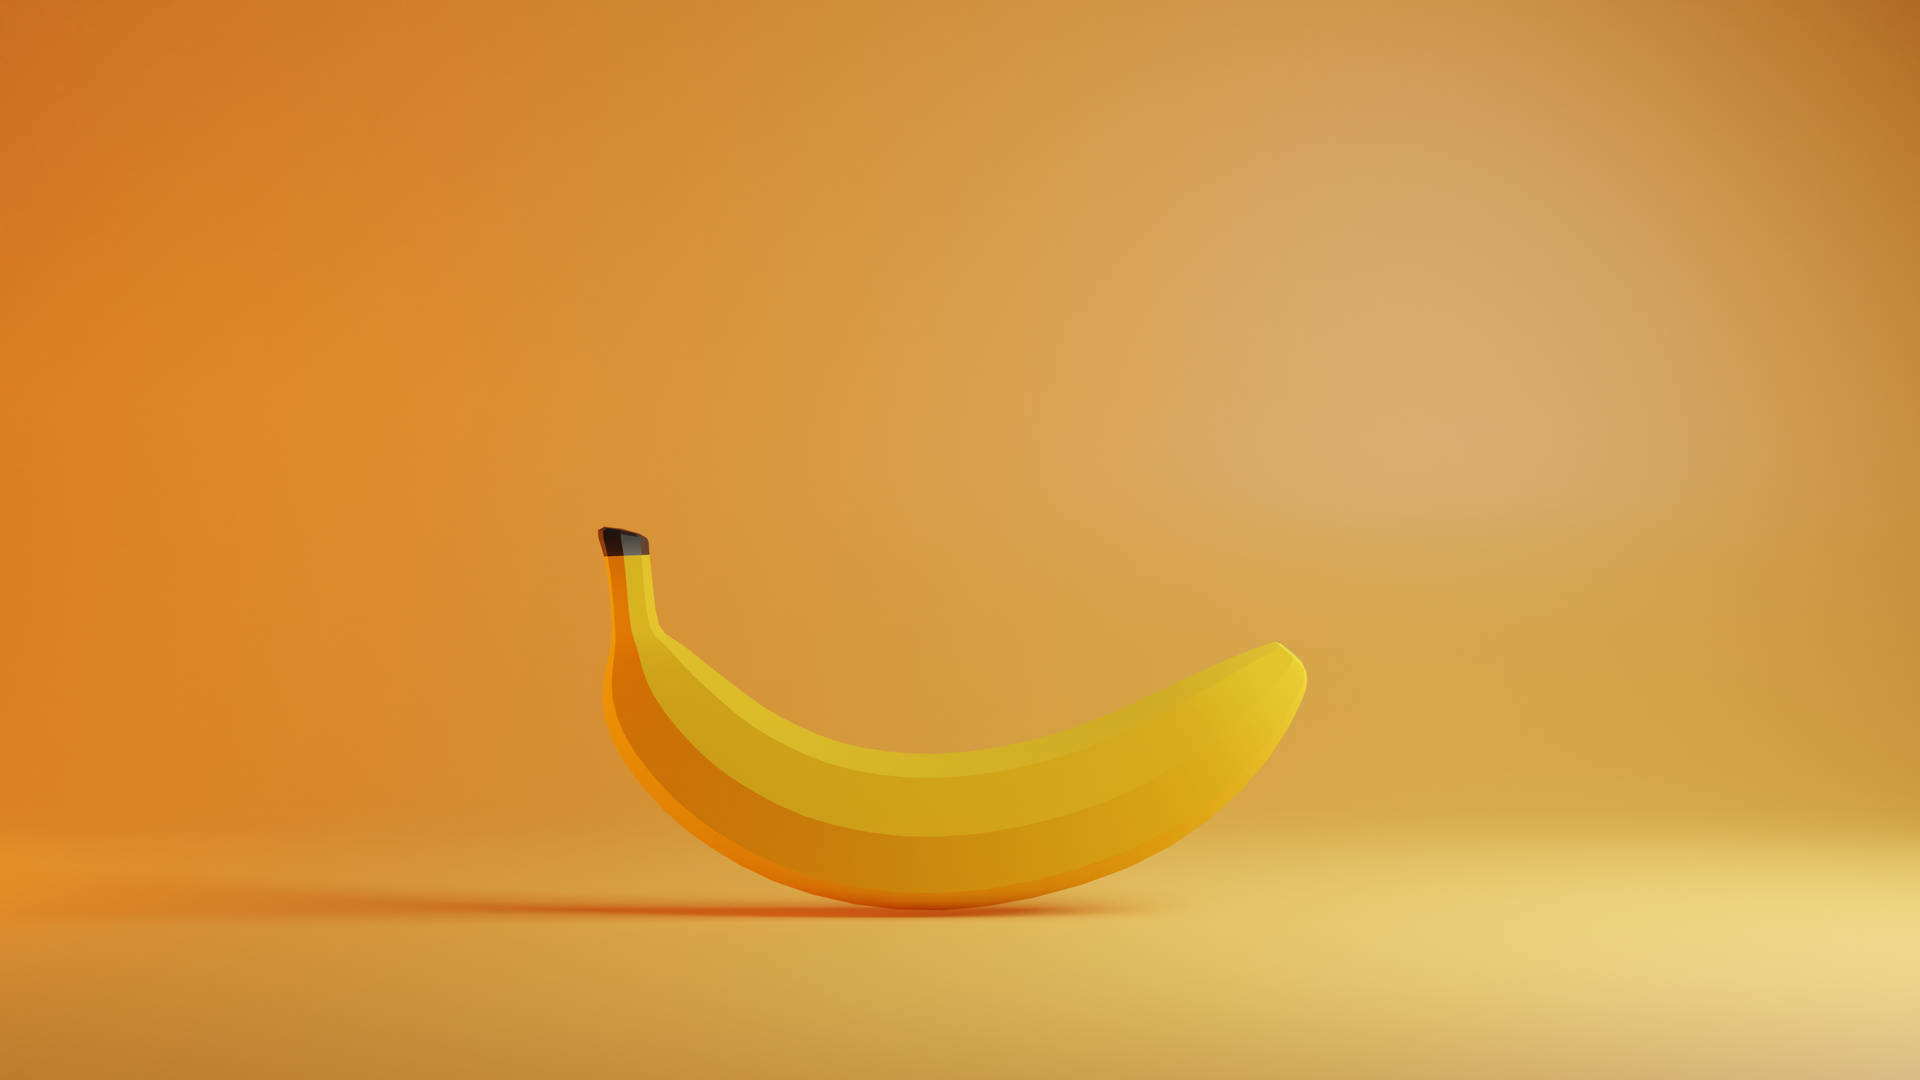 Banana 3840X2160 Wallpaper and Background Image